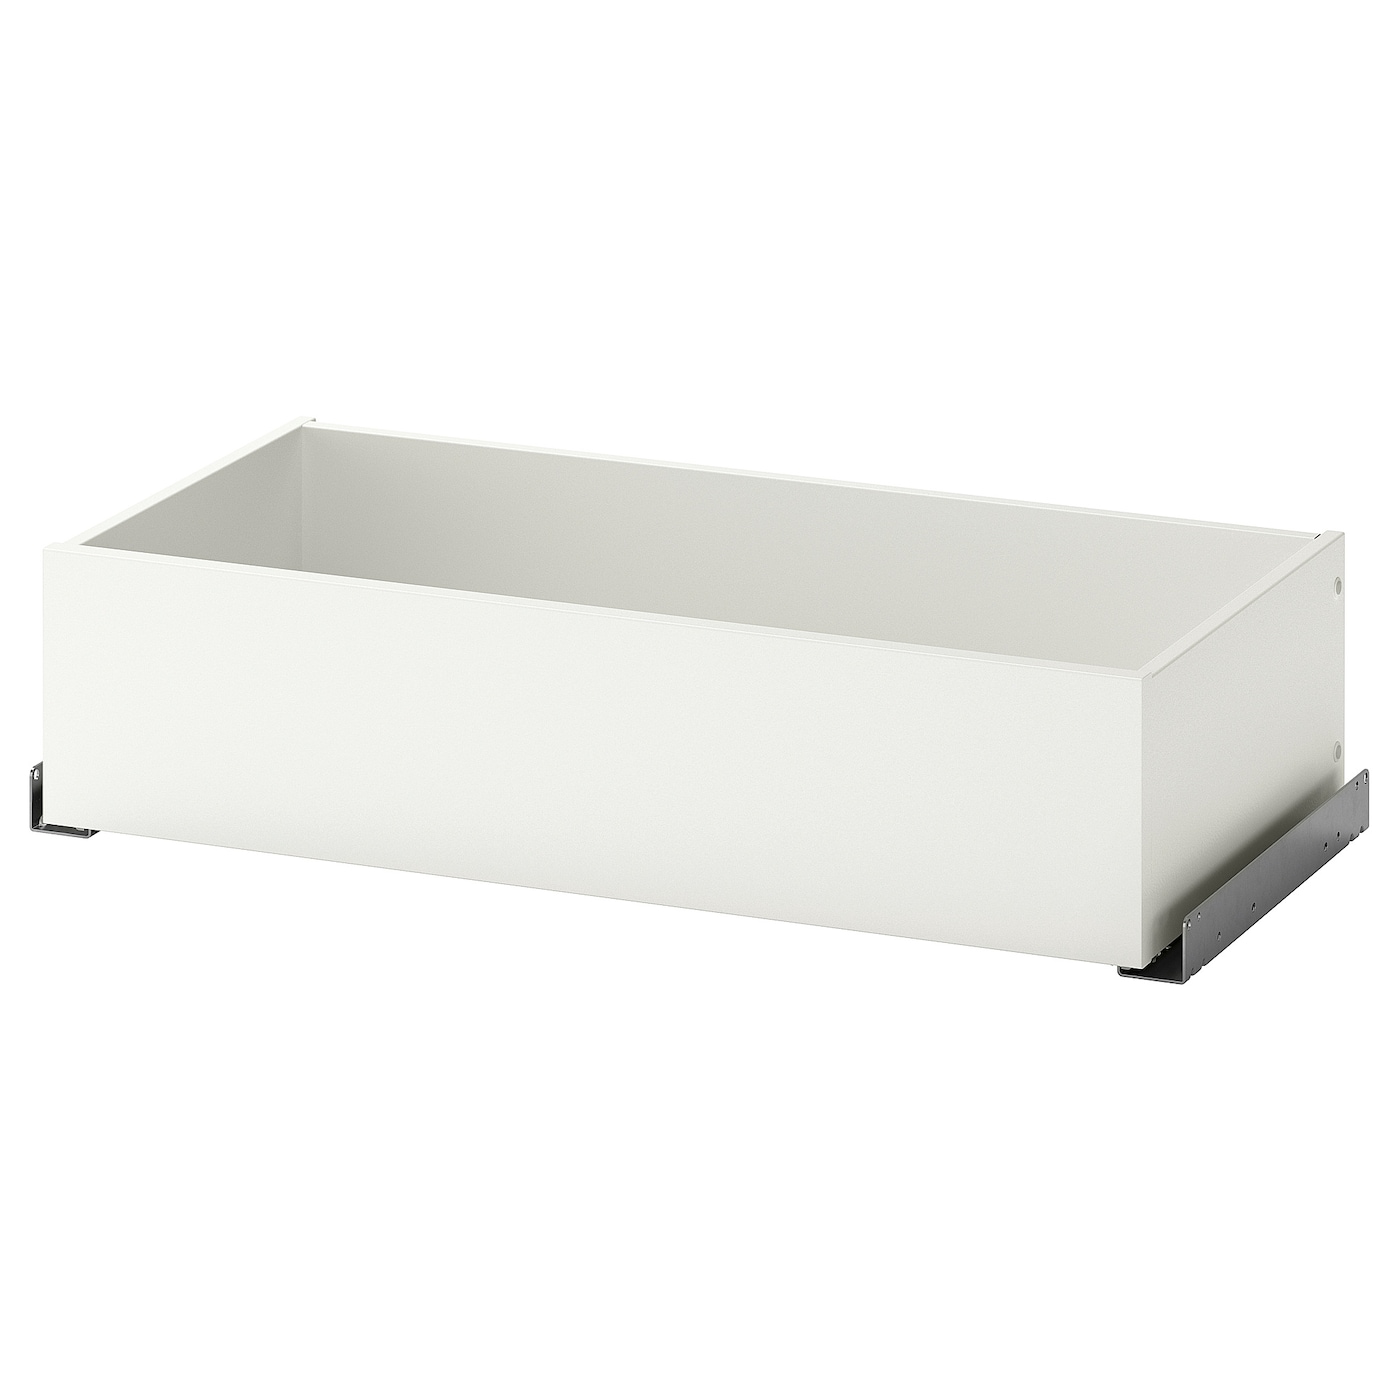 Ящик - IKEA KOMPLEMENT, 75x35 см, белый КОМПЛИМЕНТ ИКЕА